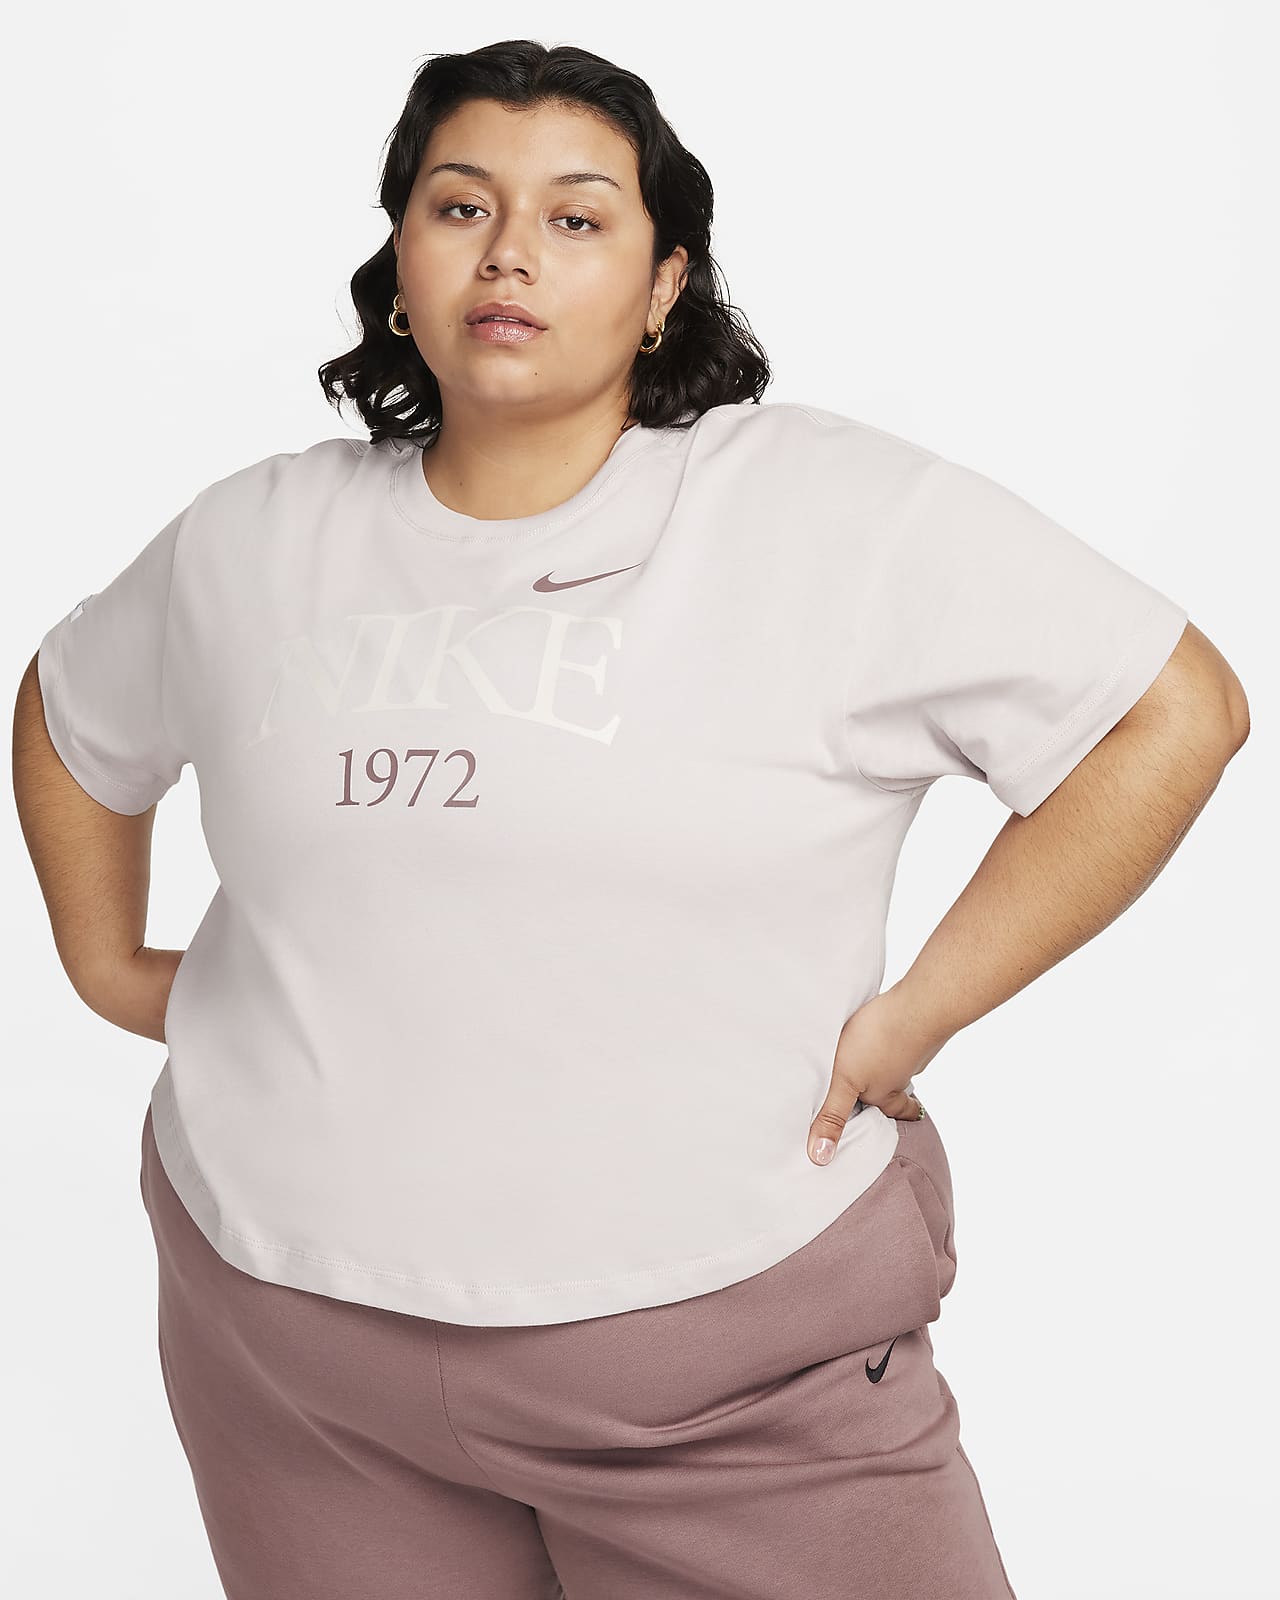 T-shirt Nike Sportswear Classic (Plus size) – Donna